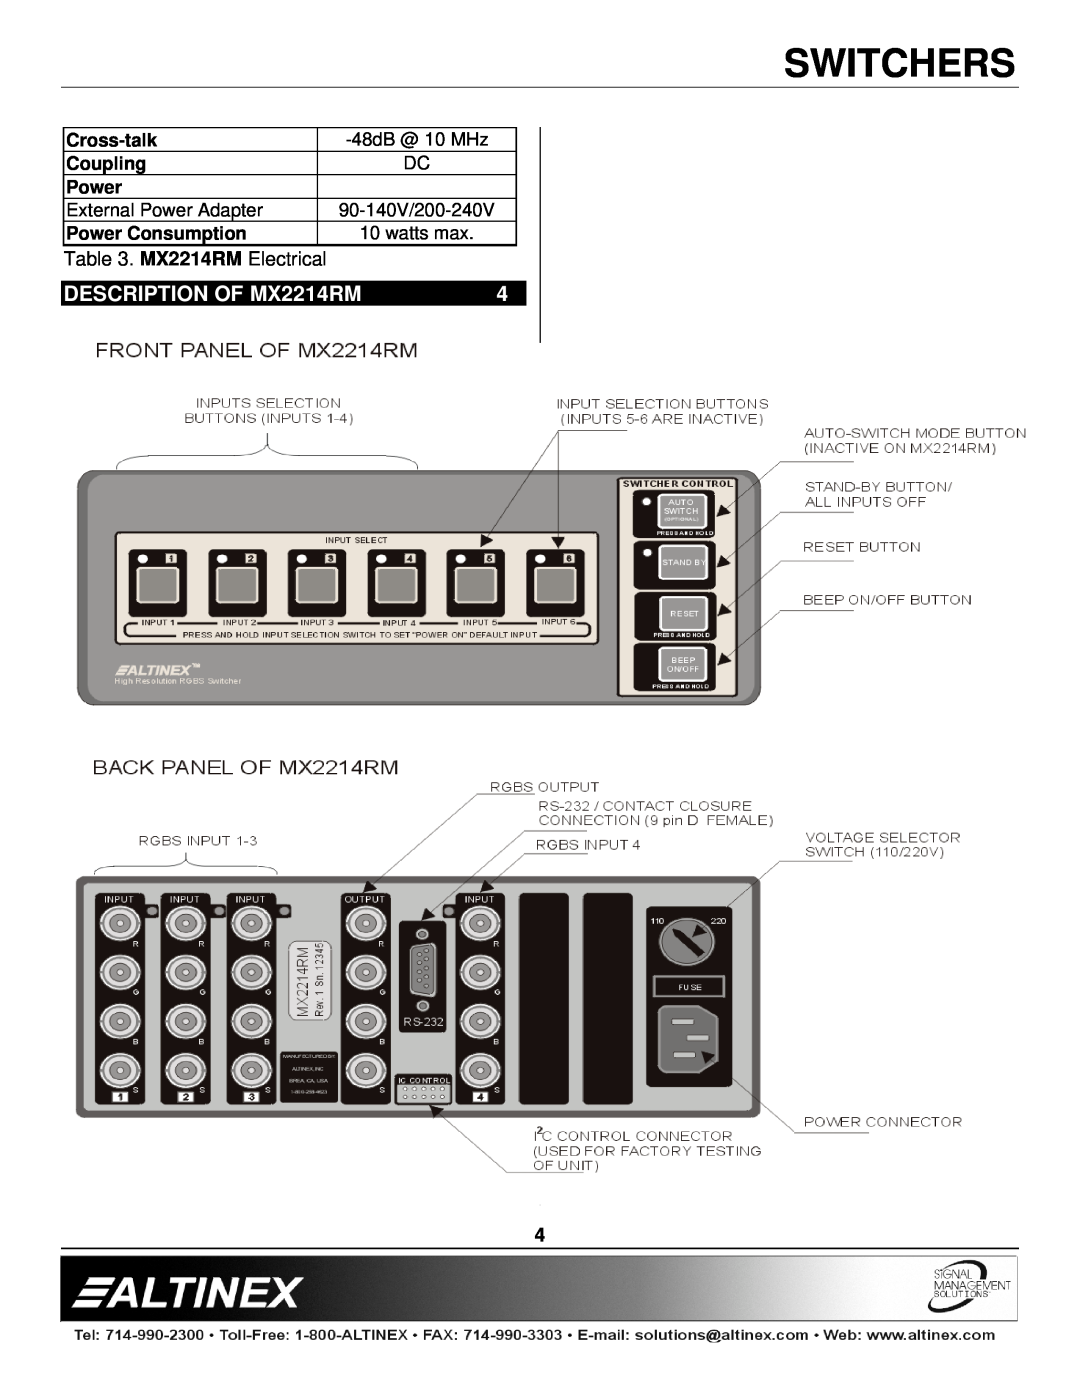 Altinex manual DESCRIPTION OF MX2214RM, Switchers, MX2214RM Electrical, 90-140V/200-240V 